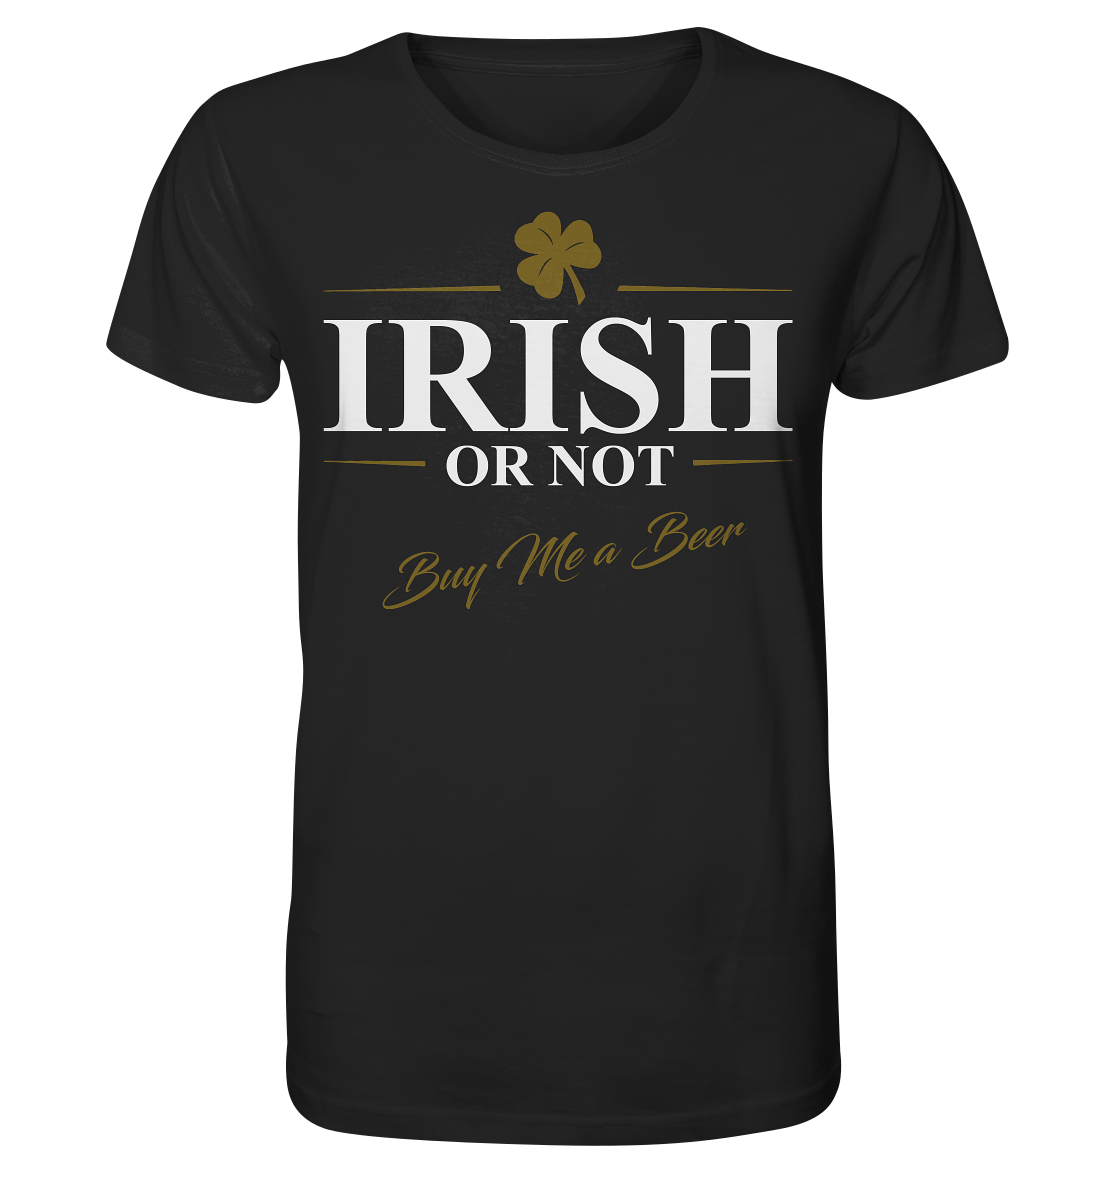 Irish Or Not "Buy Me A Beer" - Organic Shirt